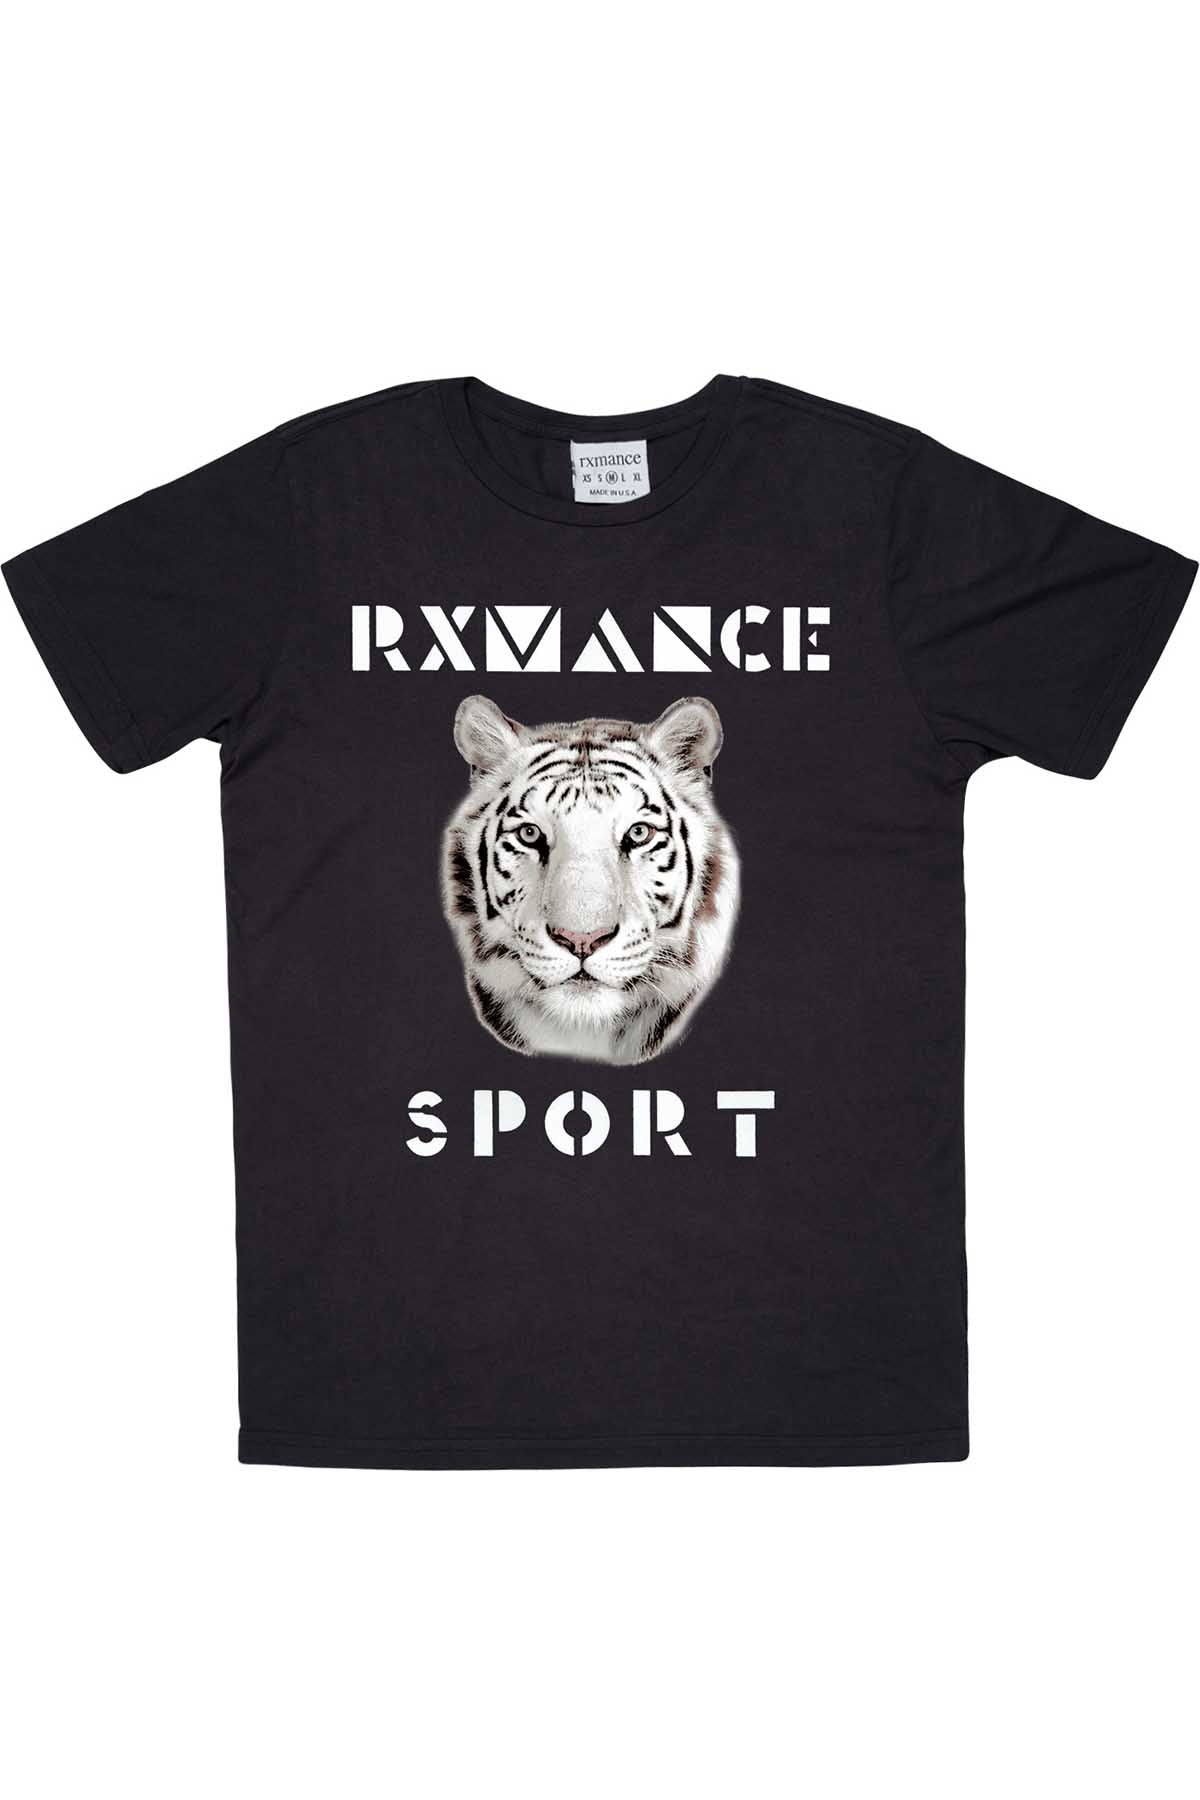 Rxmance Unisex Black Tiger Crew T